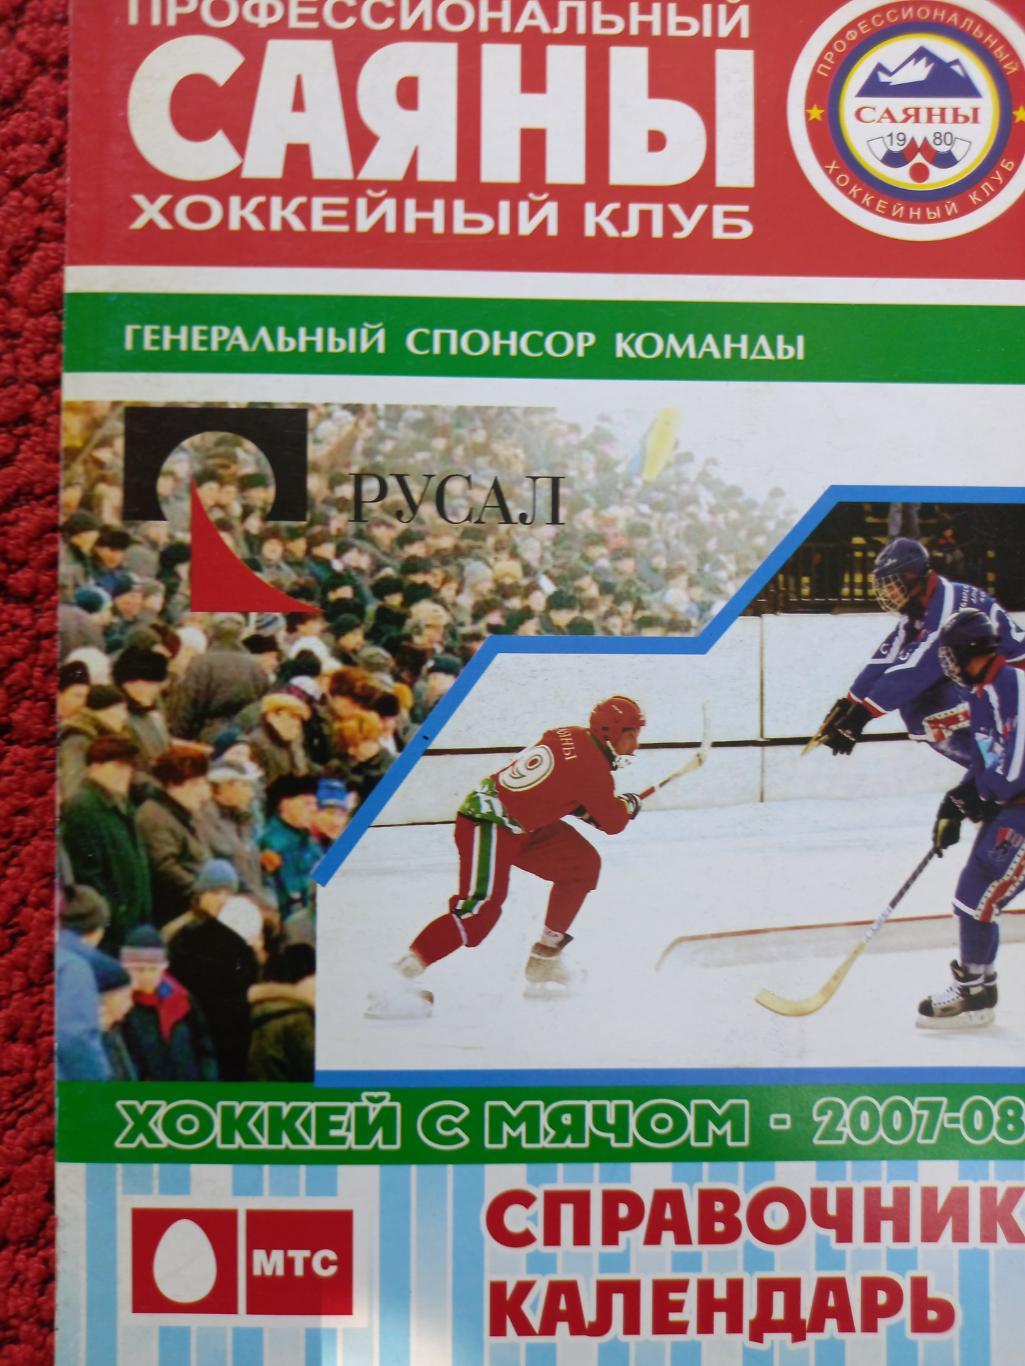 Календарь - справочник Саяны 2007-08 г. Абакан 2006г.